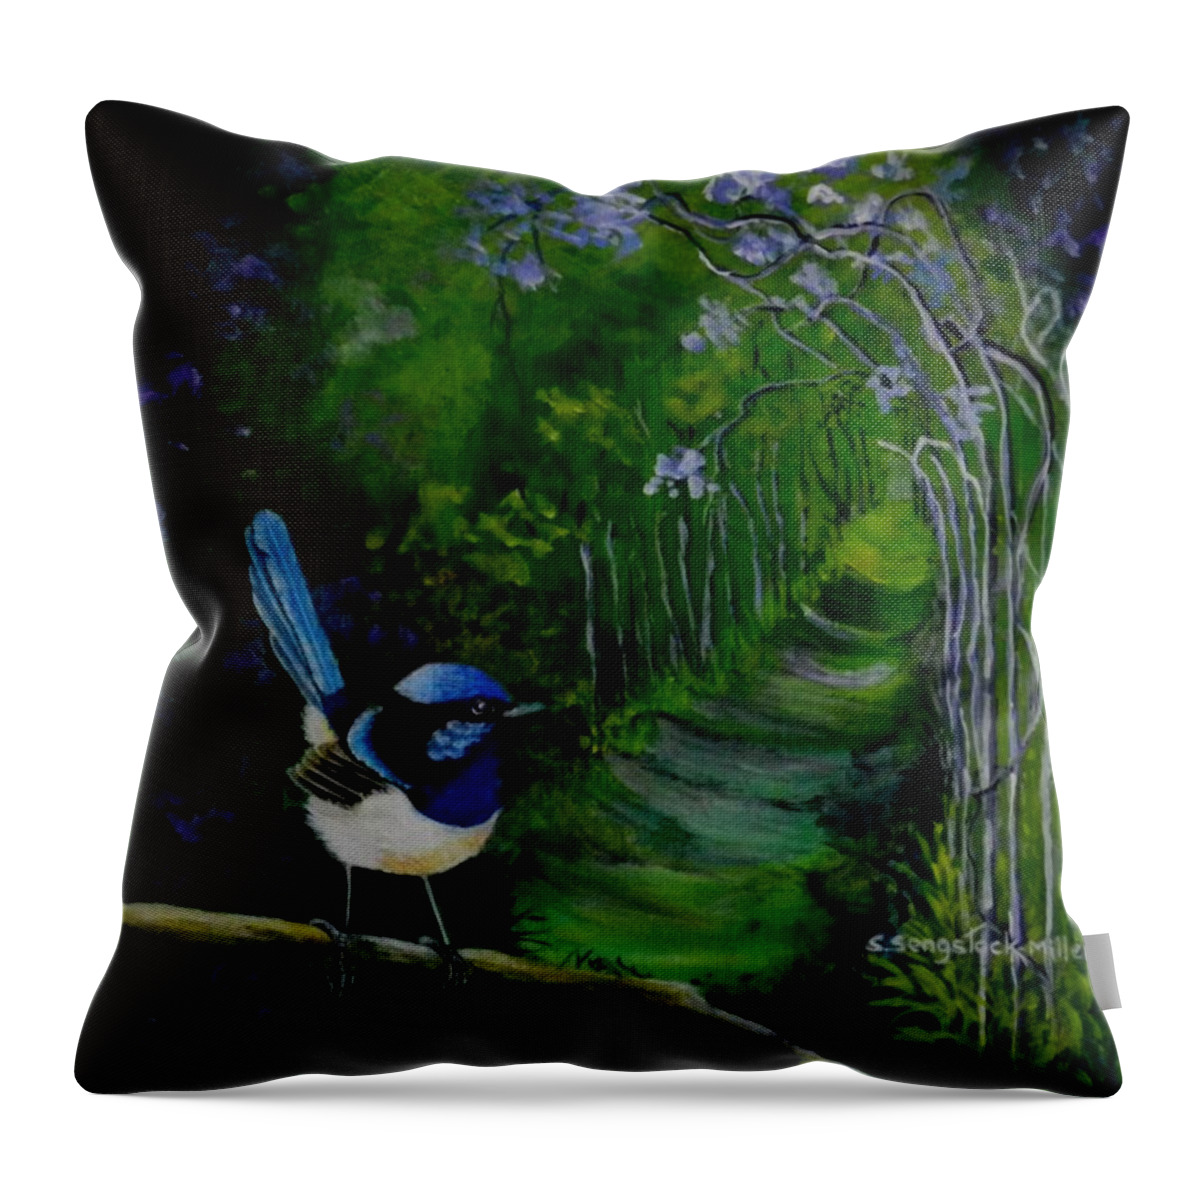 Wren Throw Pillow featuring the painting The Garden Path by Sandra Sengstock-Miller